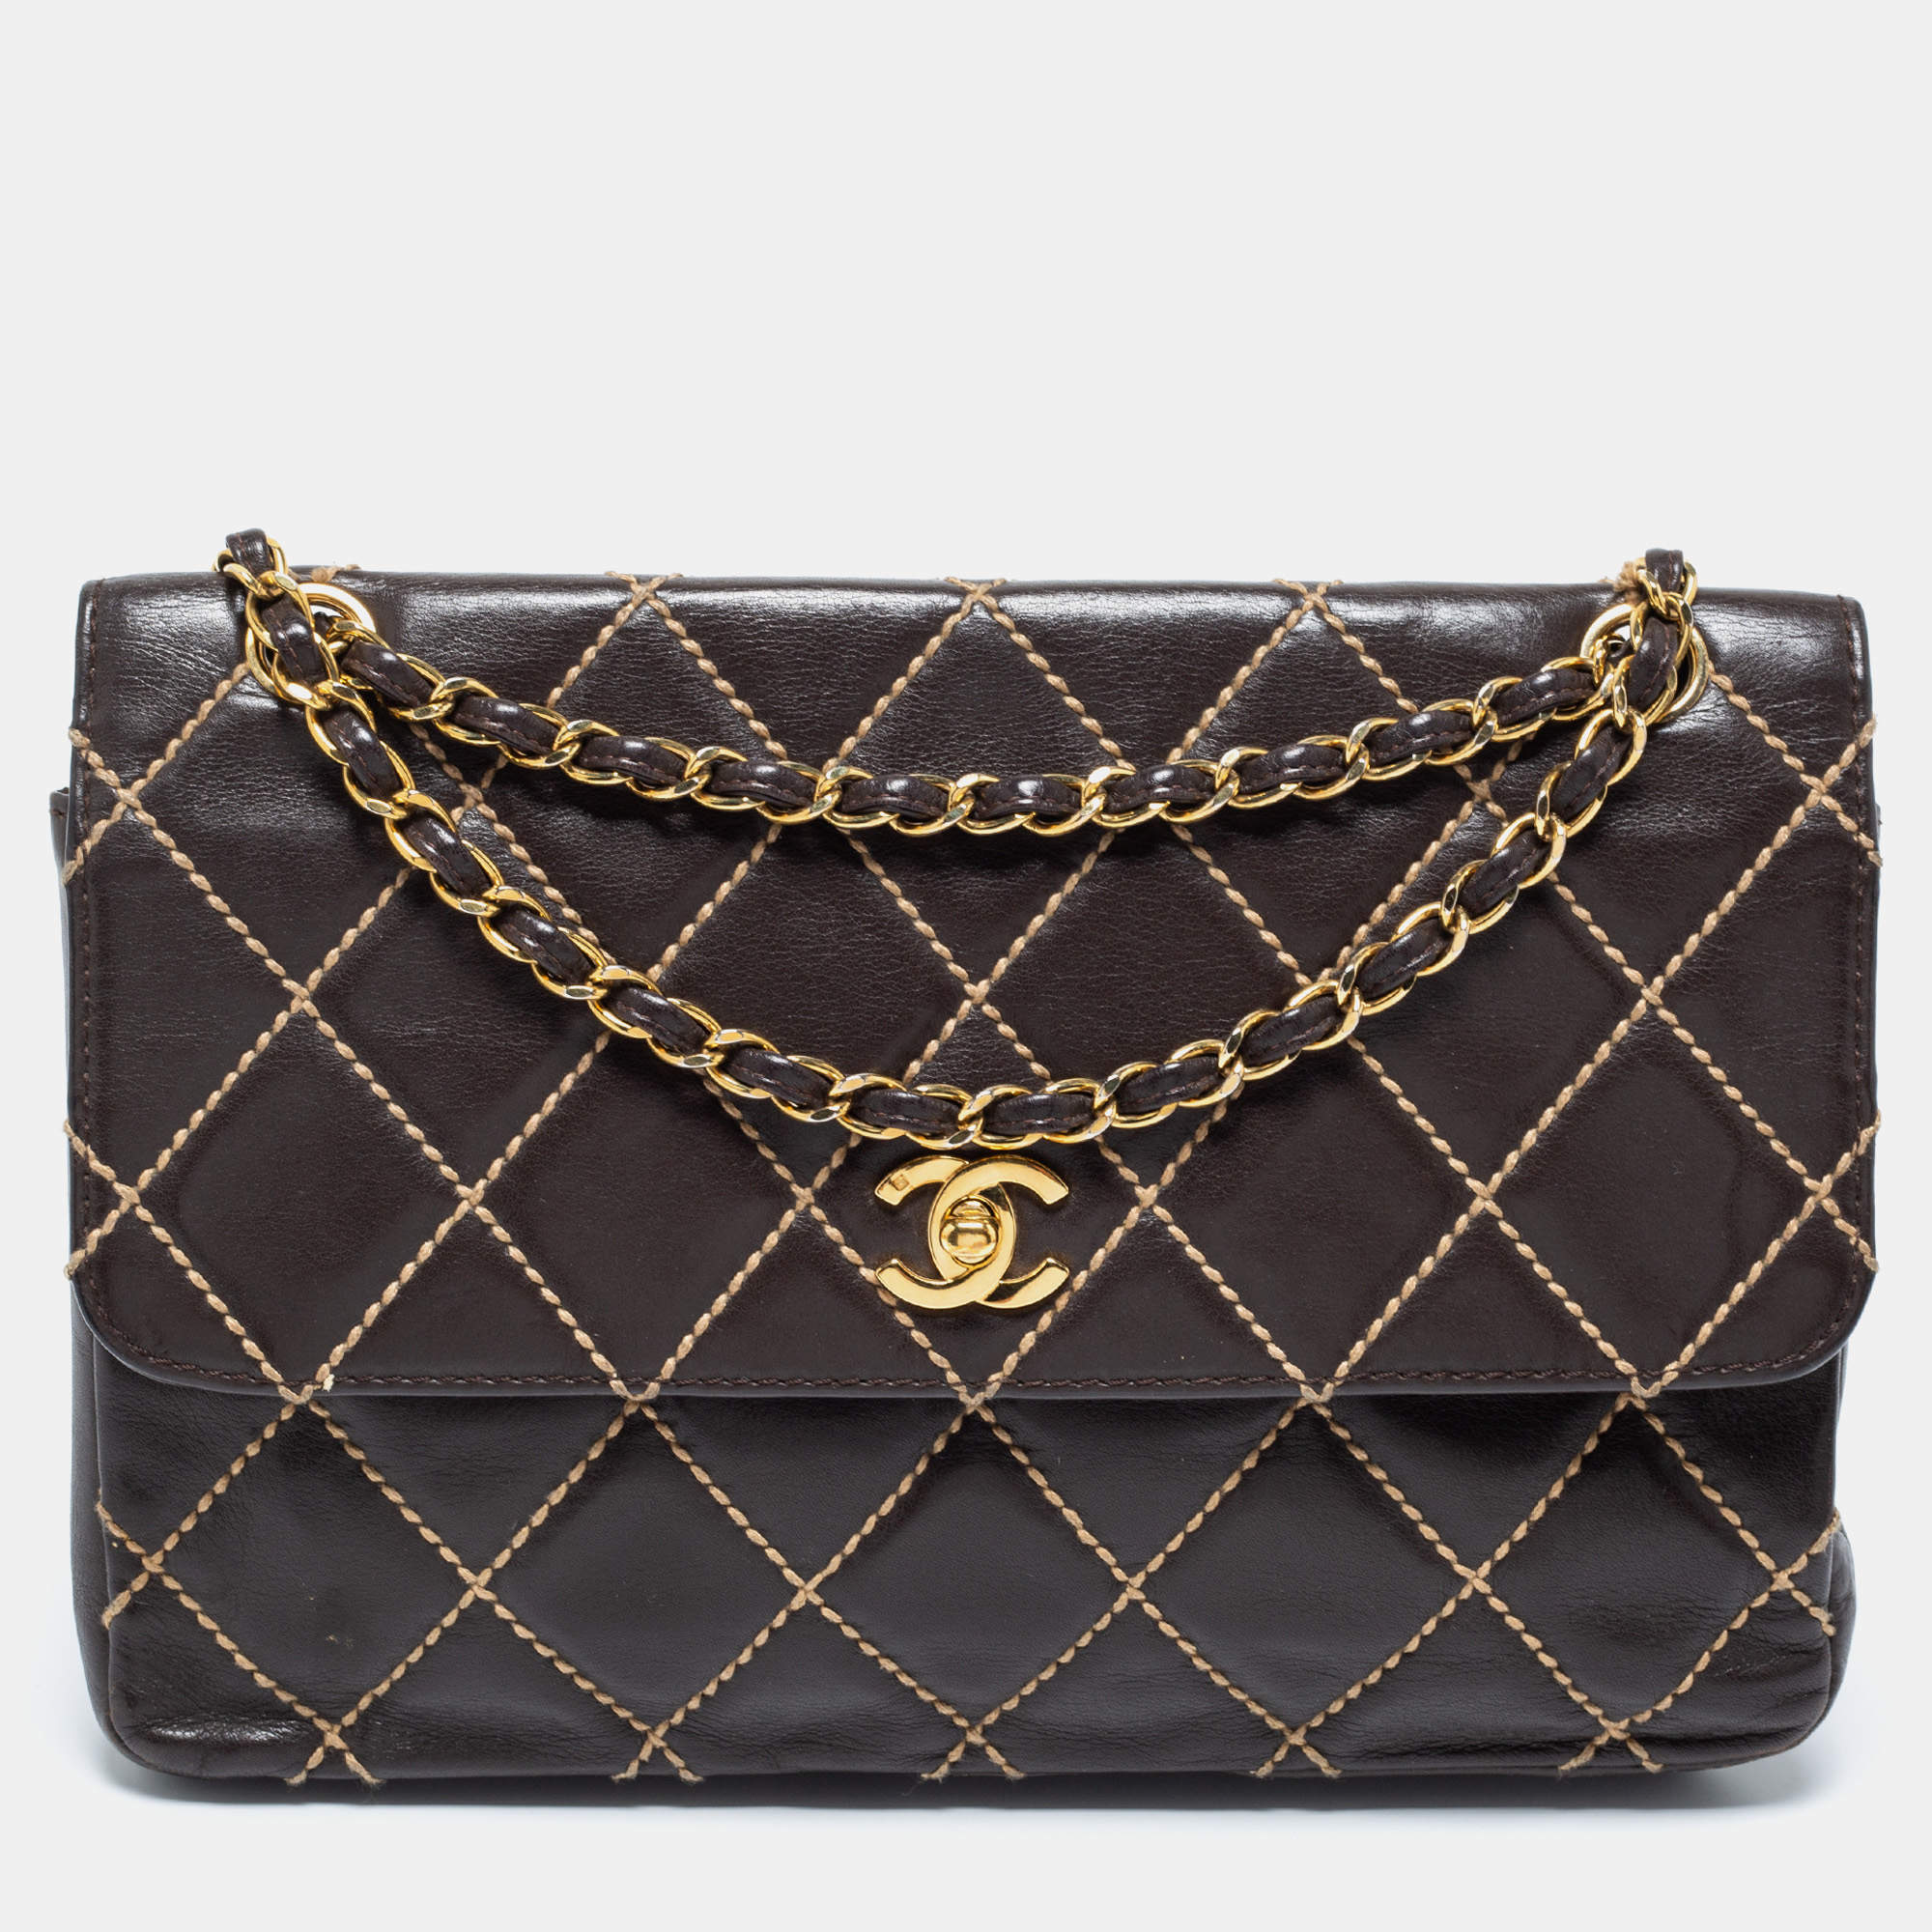 Wild stitch leather handbag Chanel Brown in Leather - 36316251